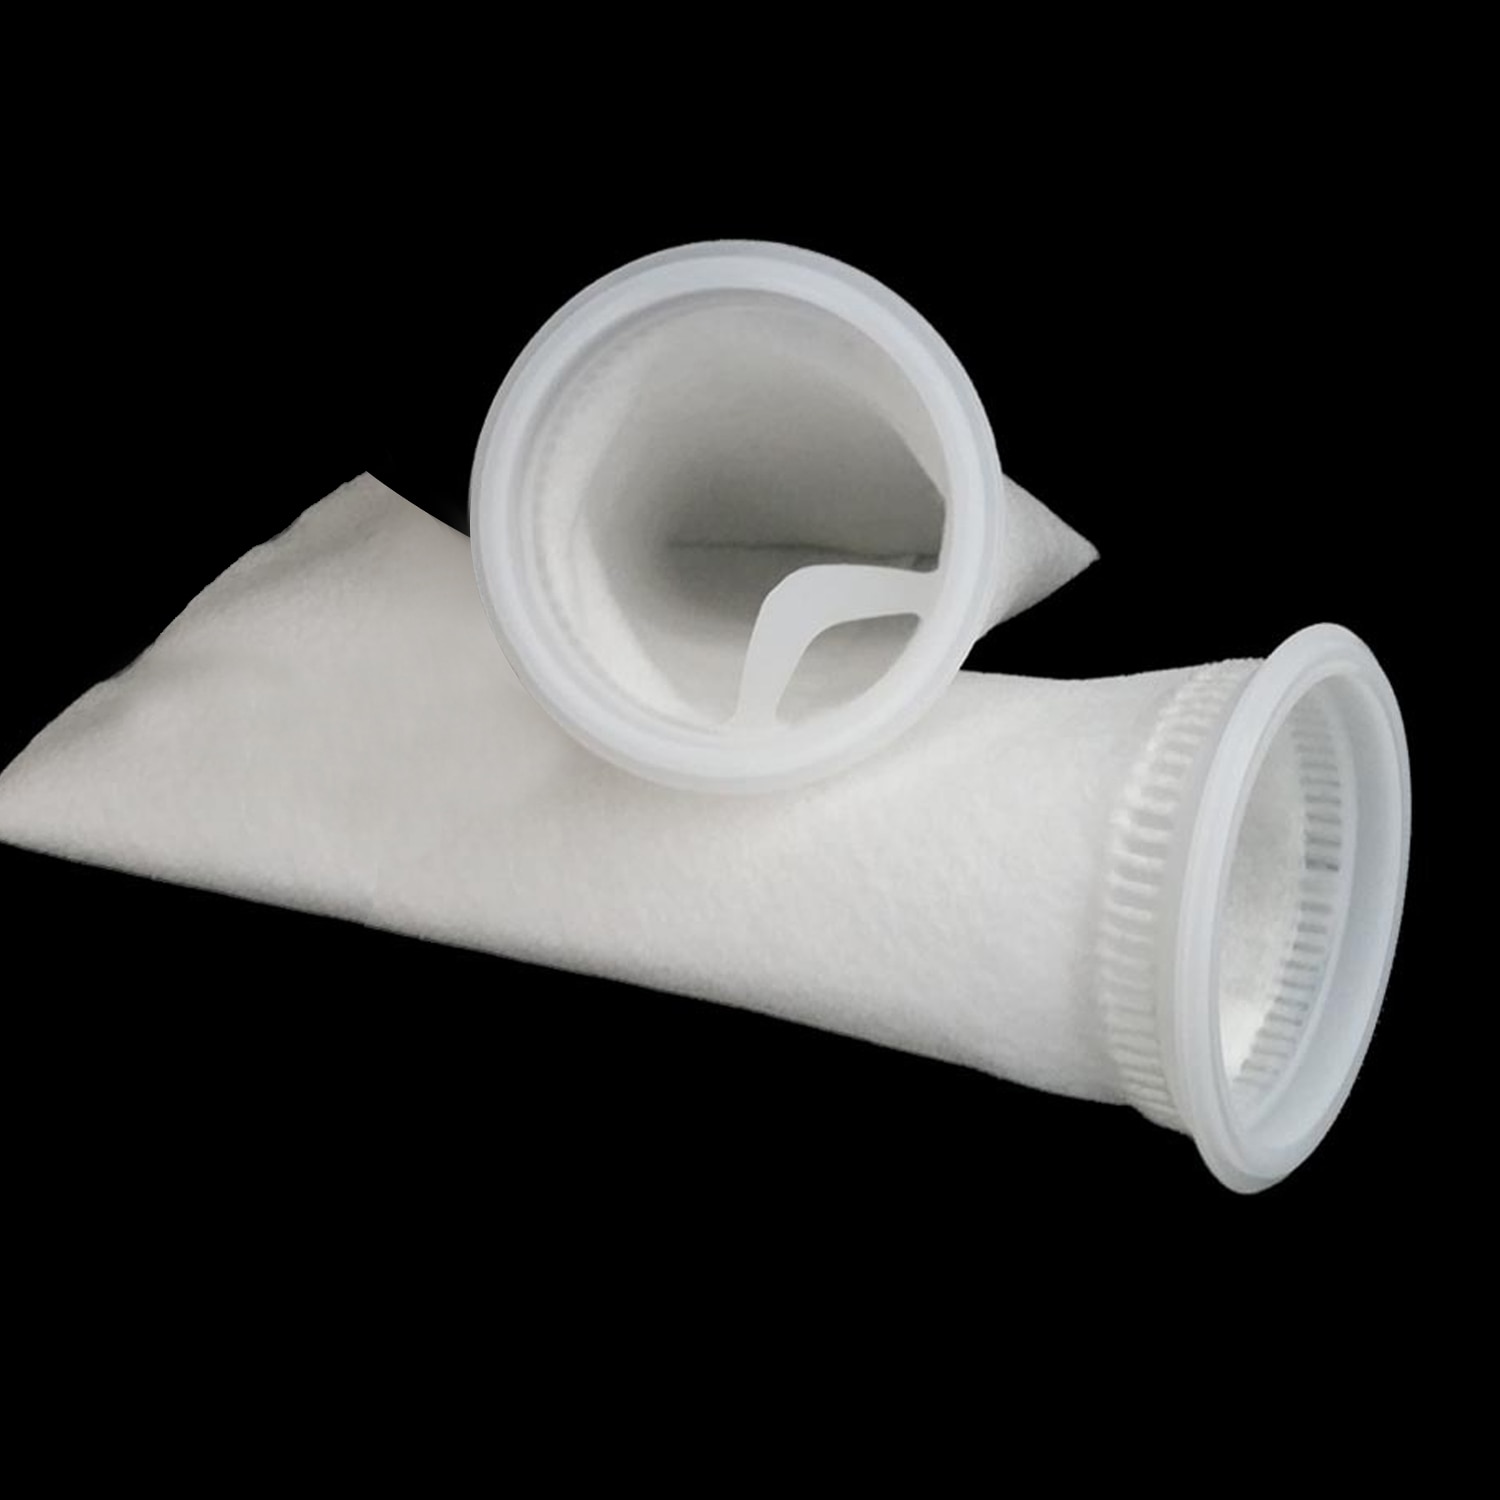 2 stk holdbar genanvendelig 200 mikron filter sokkeposer til akvariefisk akvarium 23 x 10.5cm/38 x 10.5cm